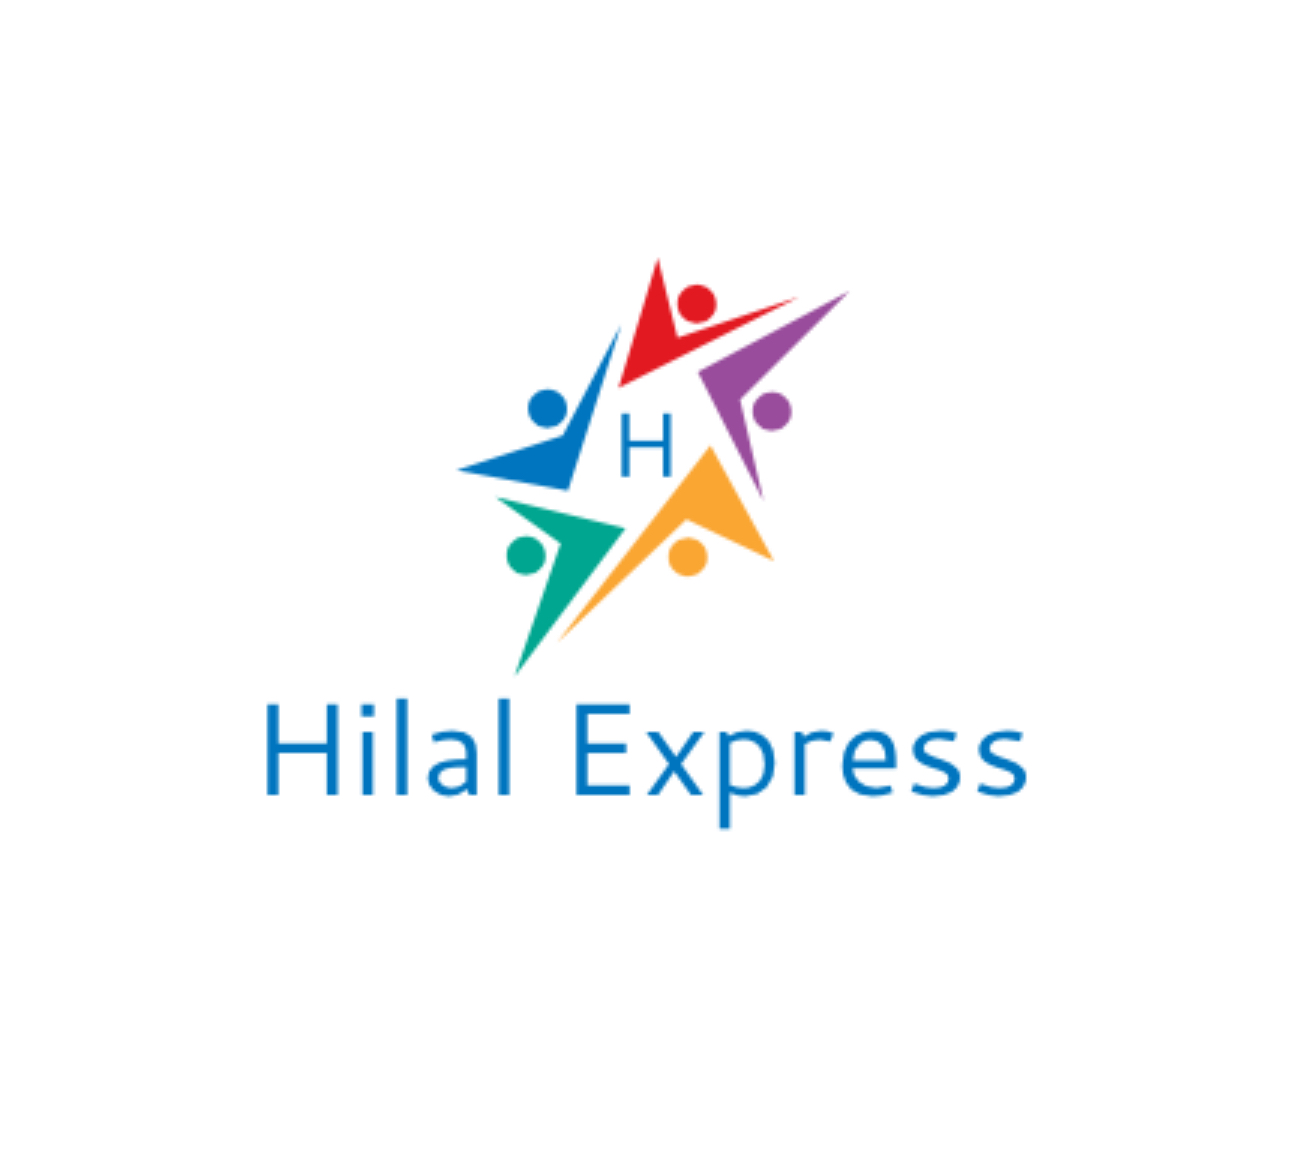 Hilal Express